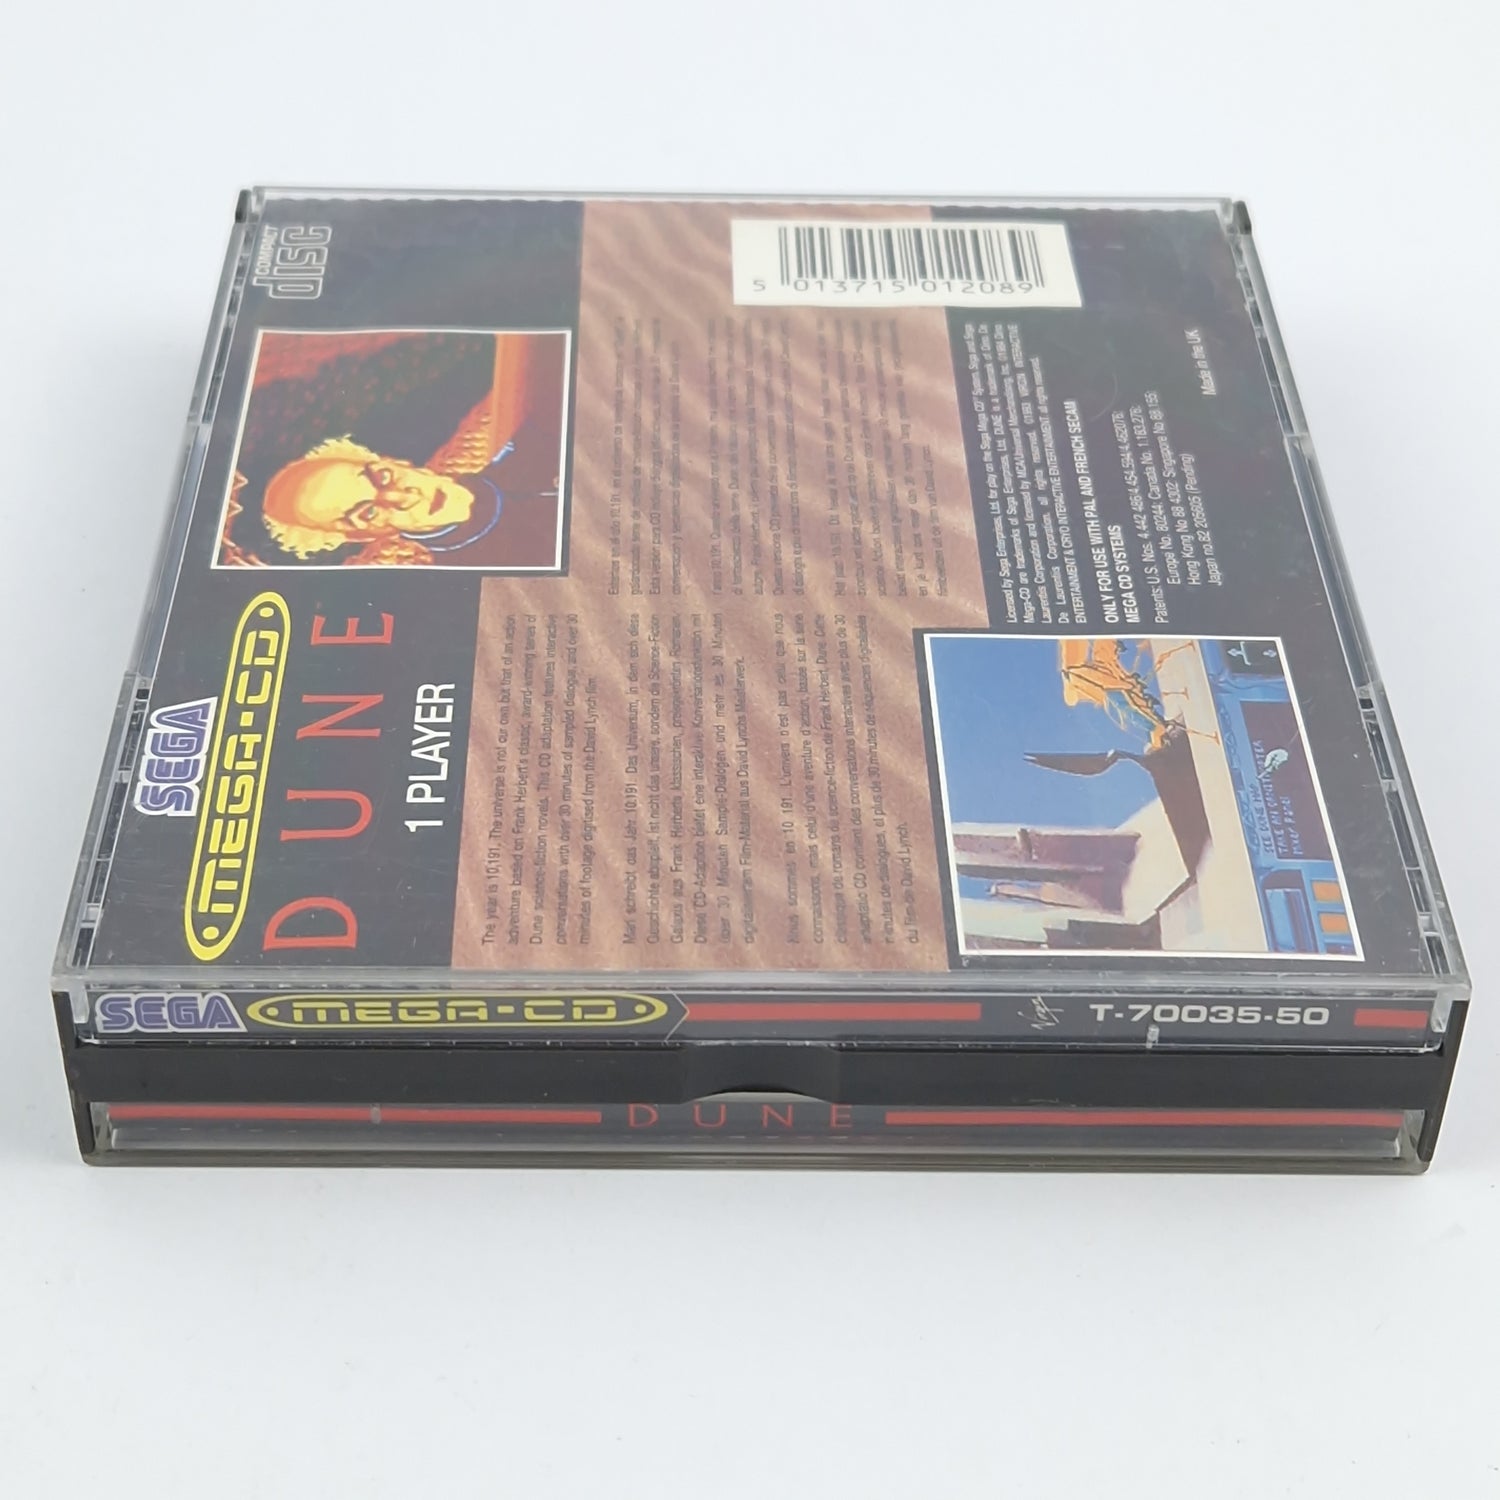 Sega Mega CD Game: DUNE - CD Instructions OVP / MCD Disk PAL Game